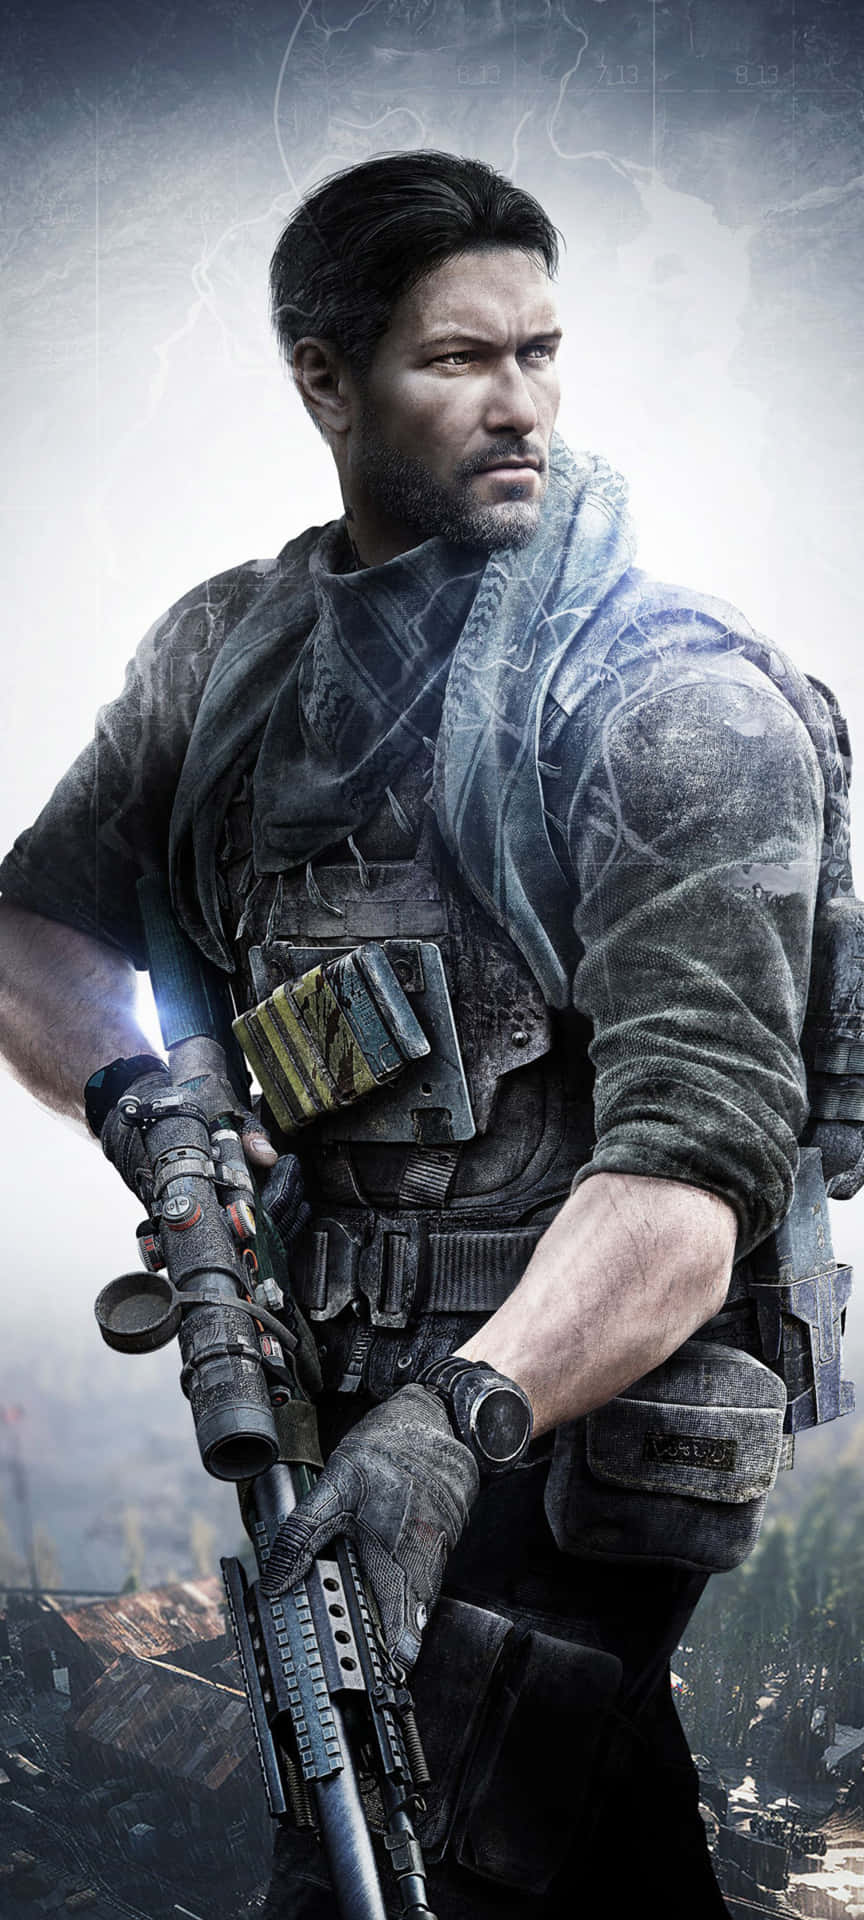 Intense Sniper Character Portrait Wallpaper